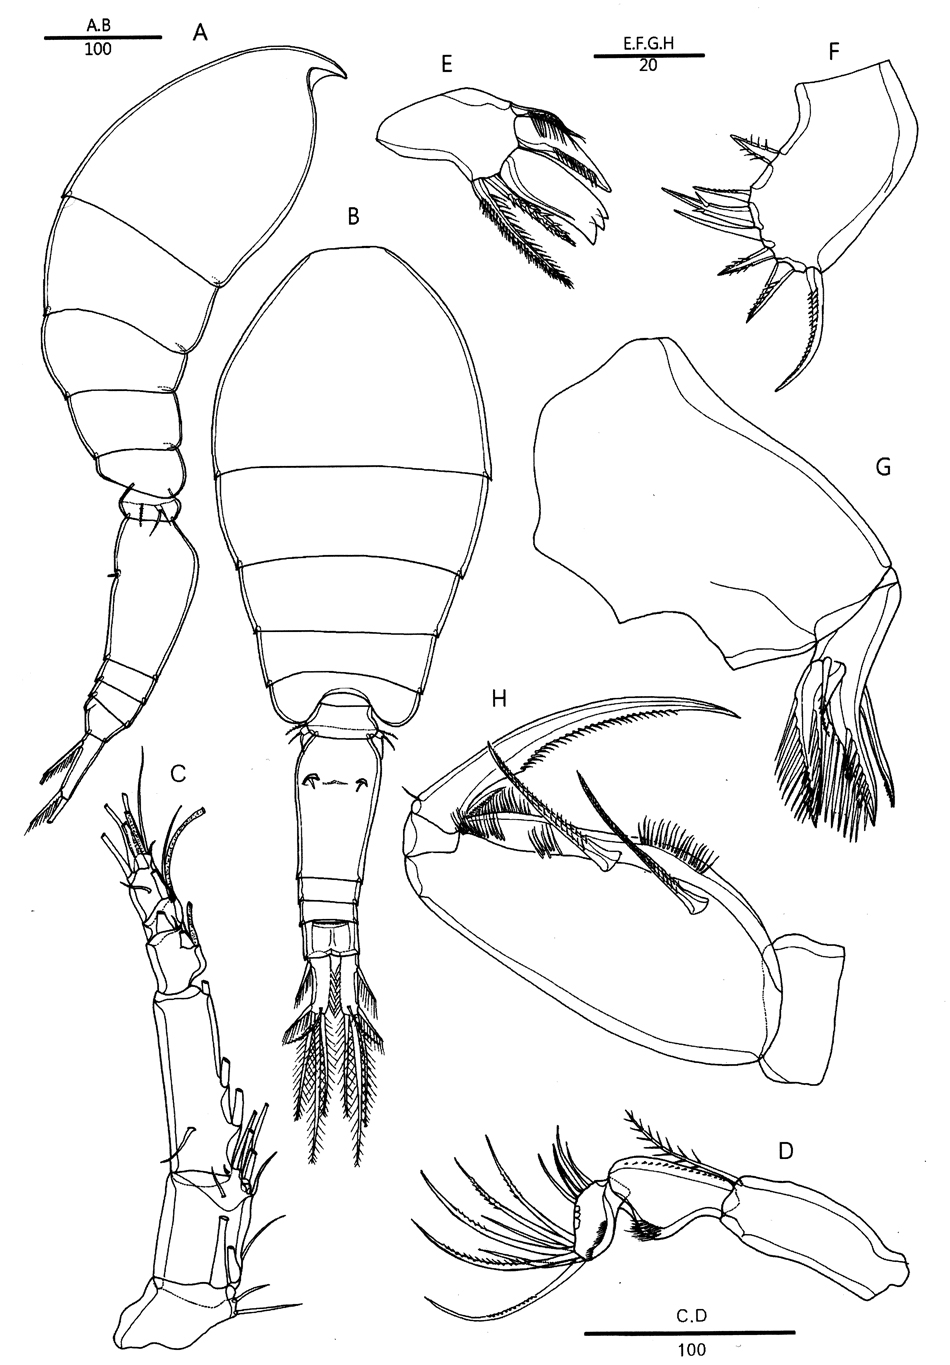 Species Oncaea venella - Plate 6 of morphological figures